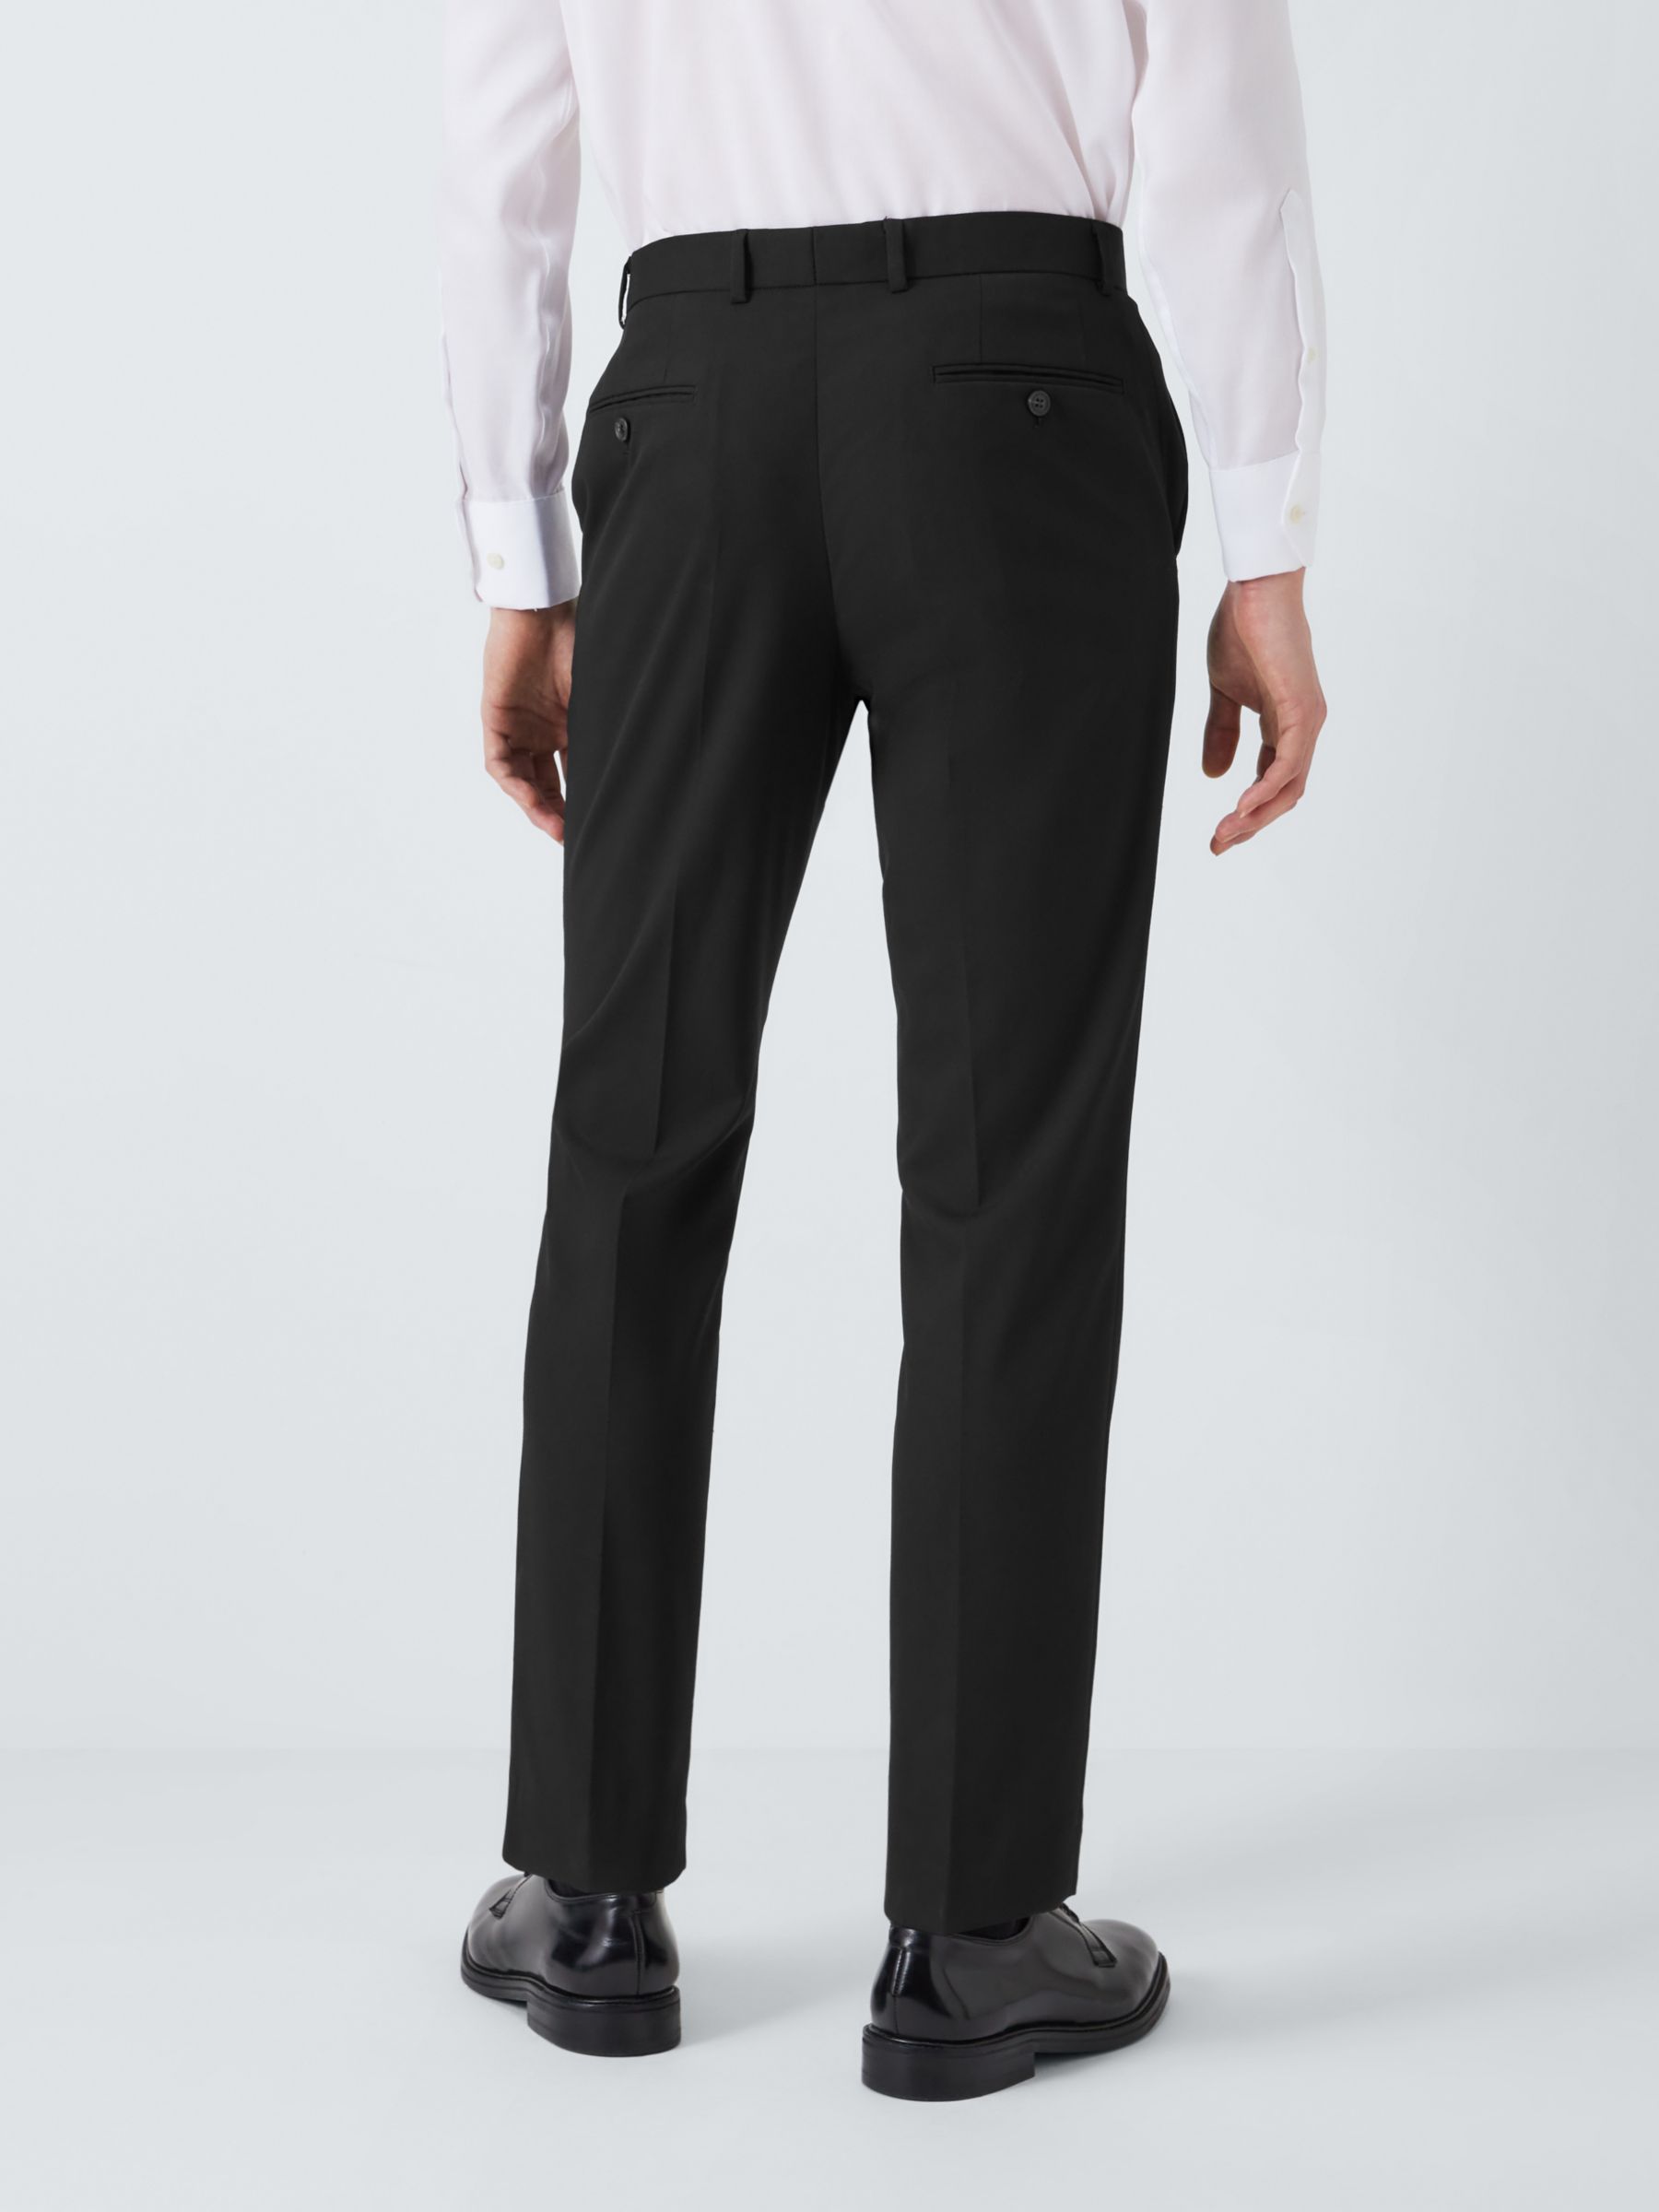 Men's Black, Flat Front, Comfort-Waist Tuxedo Pants with Satin